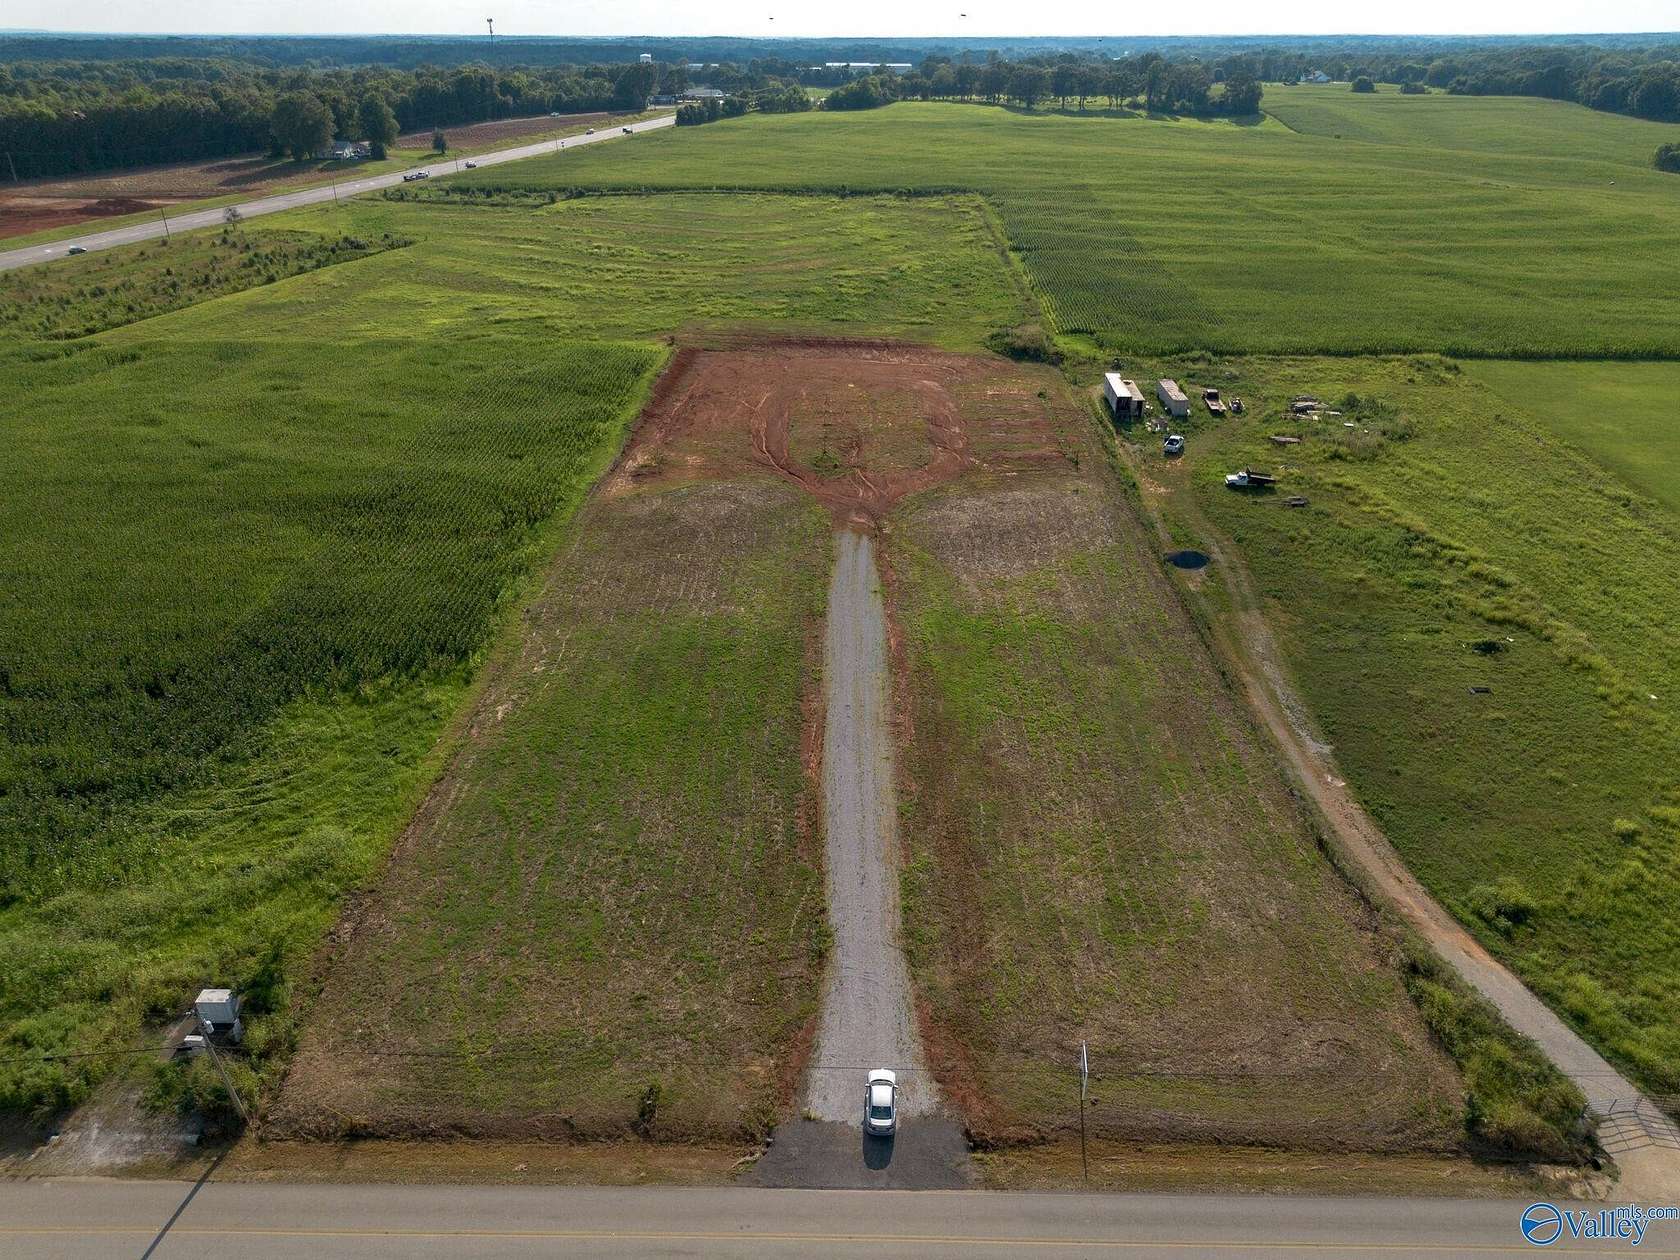 3.6 Acres of Land for Sale in Rogersville, Alabama